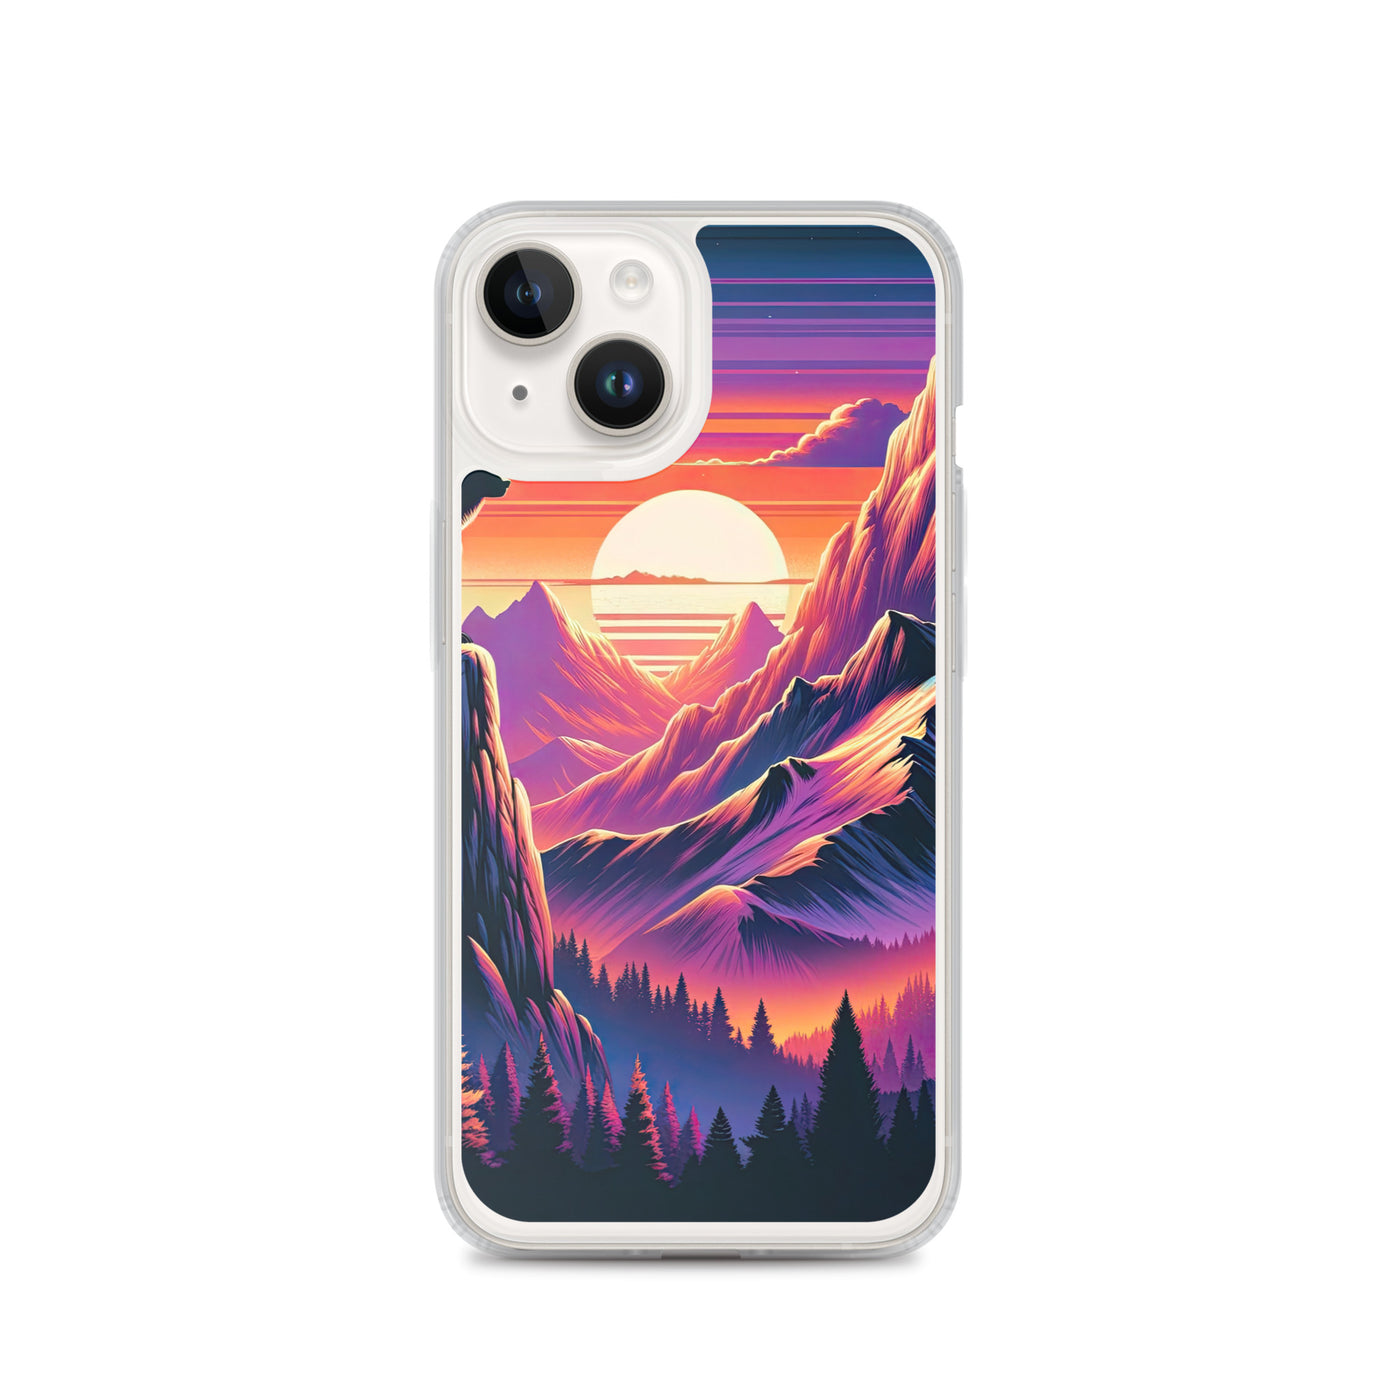 Alpen-Sonnenuntergang mit Bär auf Hügel, warmes Himmelsfarbenspiel - iPhone Schutzhülle (durchsichtig) camping xxx yyy zzz iPhone 14